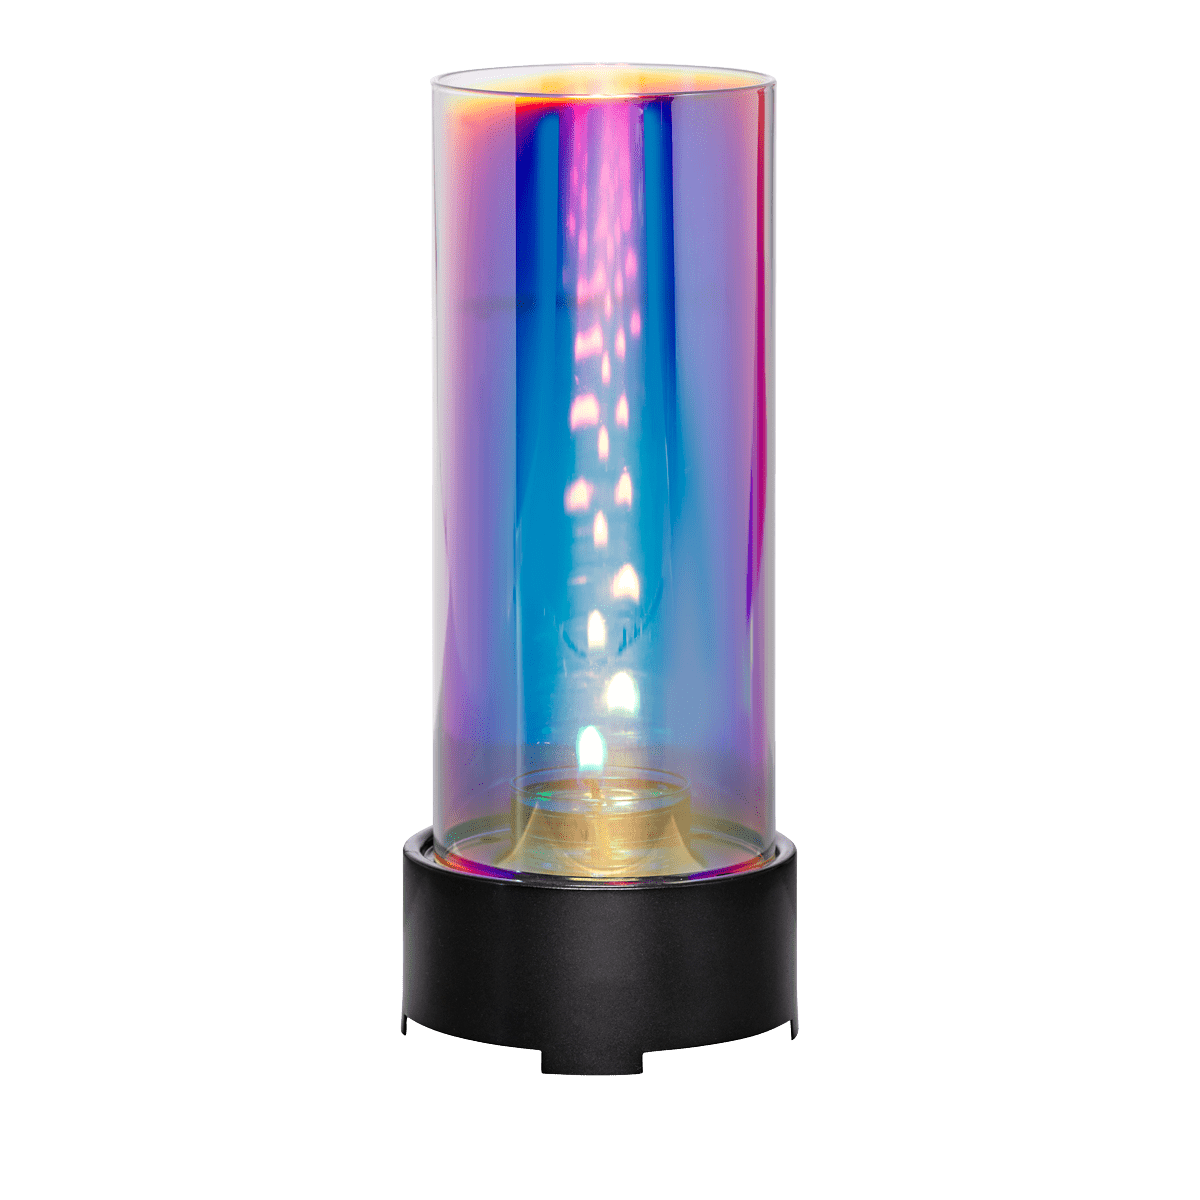 Infinite Rainbow Reflections Tealight Holder - PartyLite US